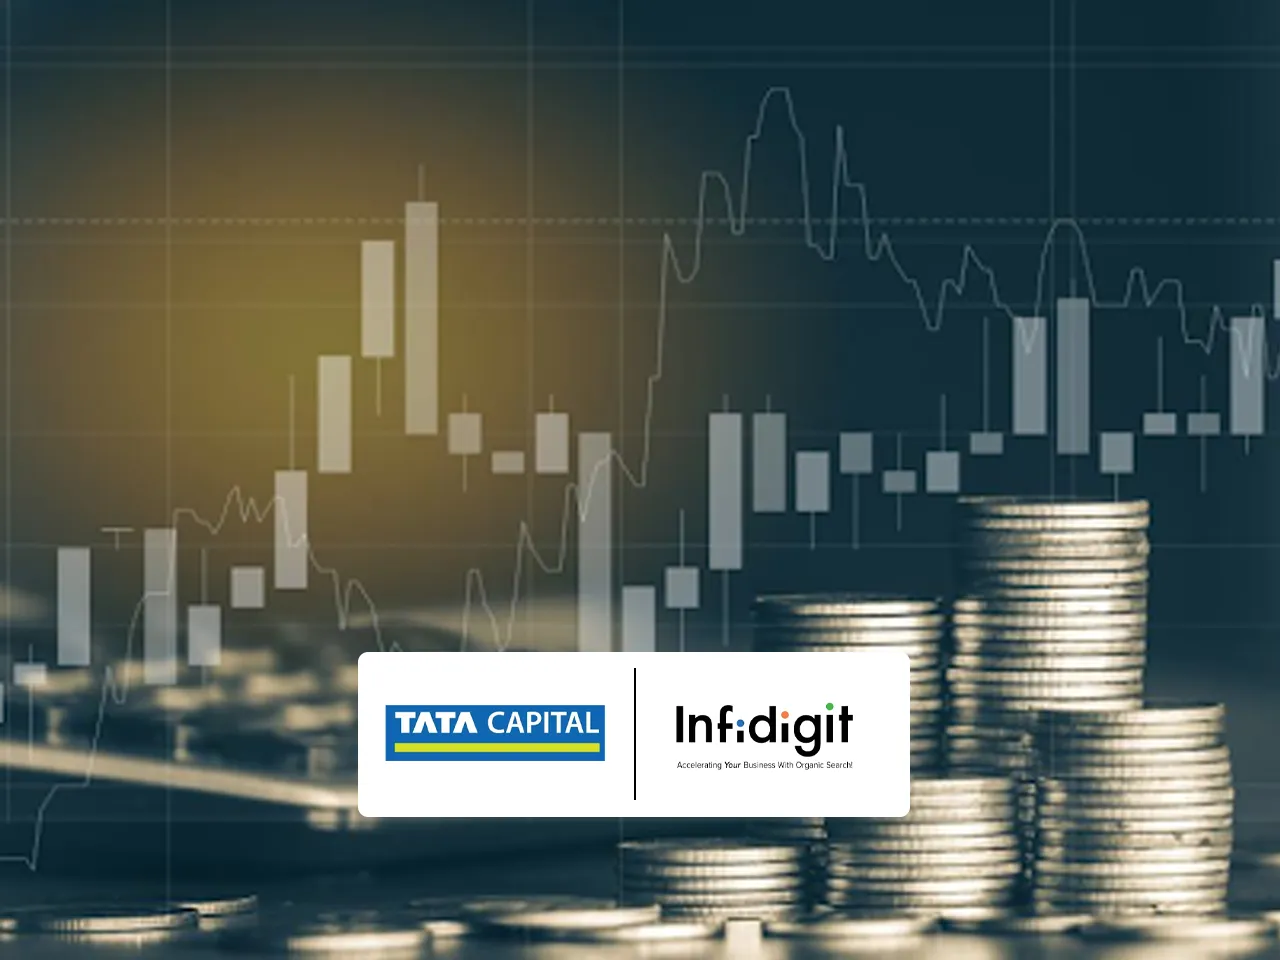 Infidigit wins Tata Capital's SEO mandate